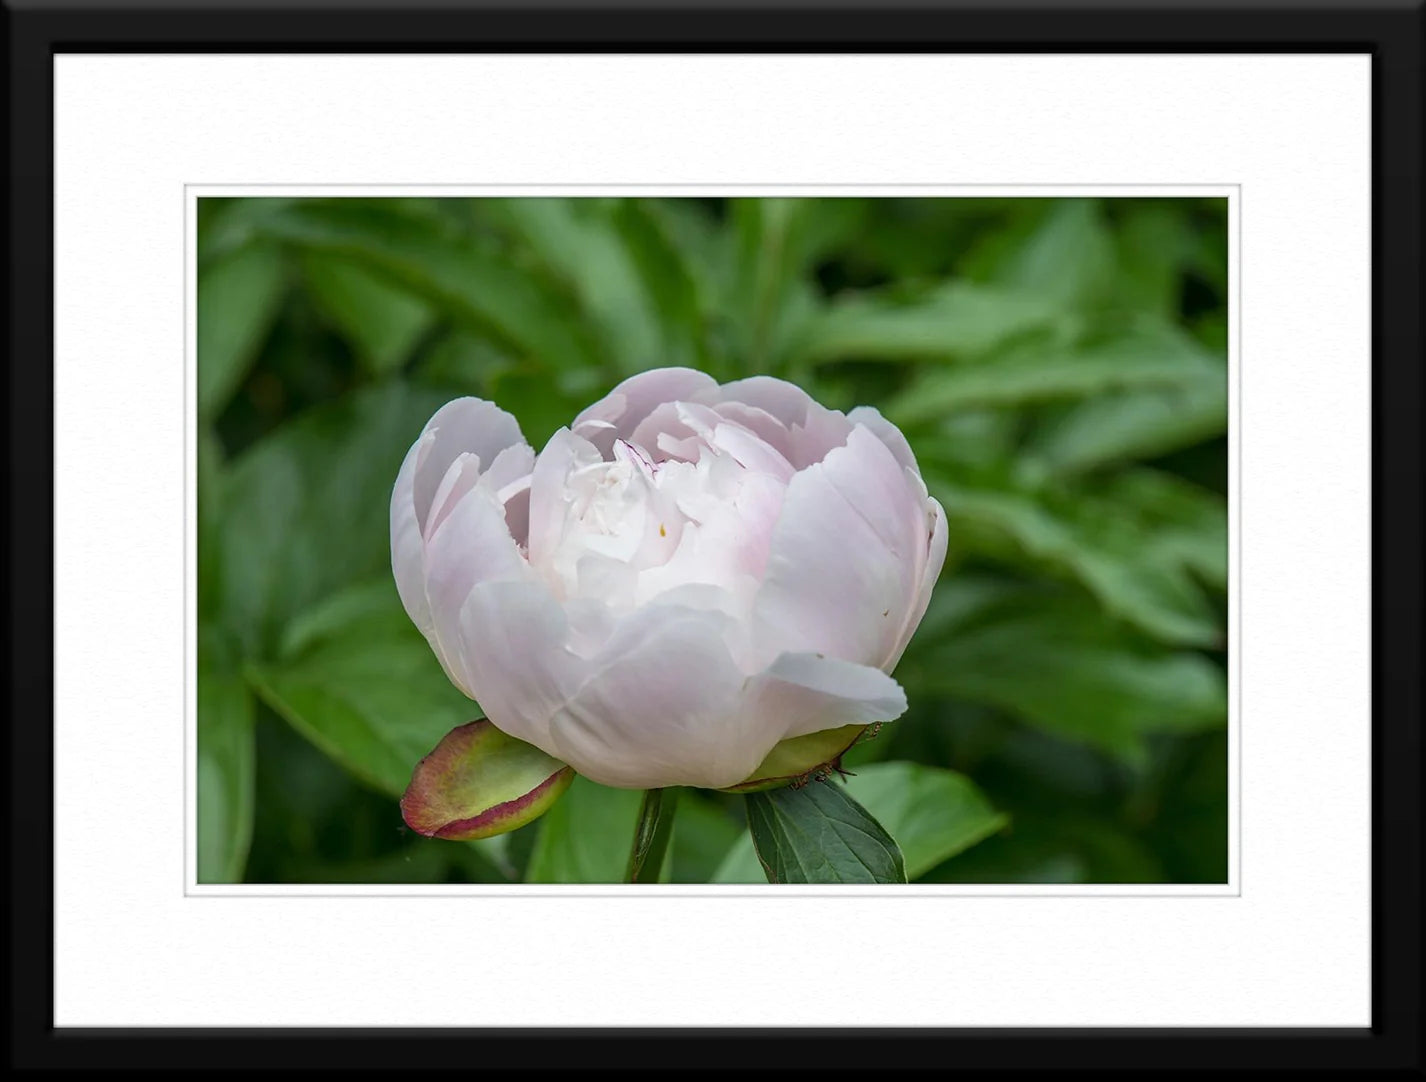 Framed Photograph of a White Rose